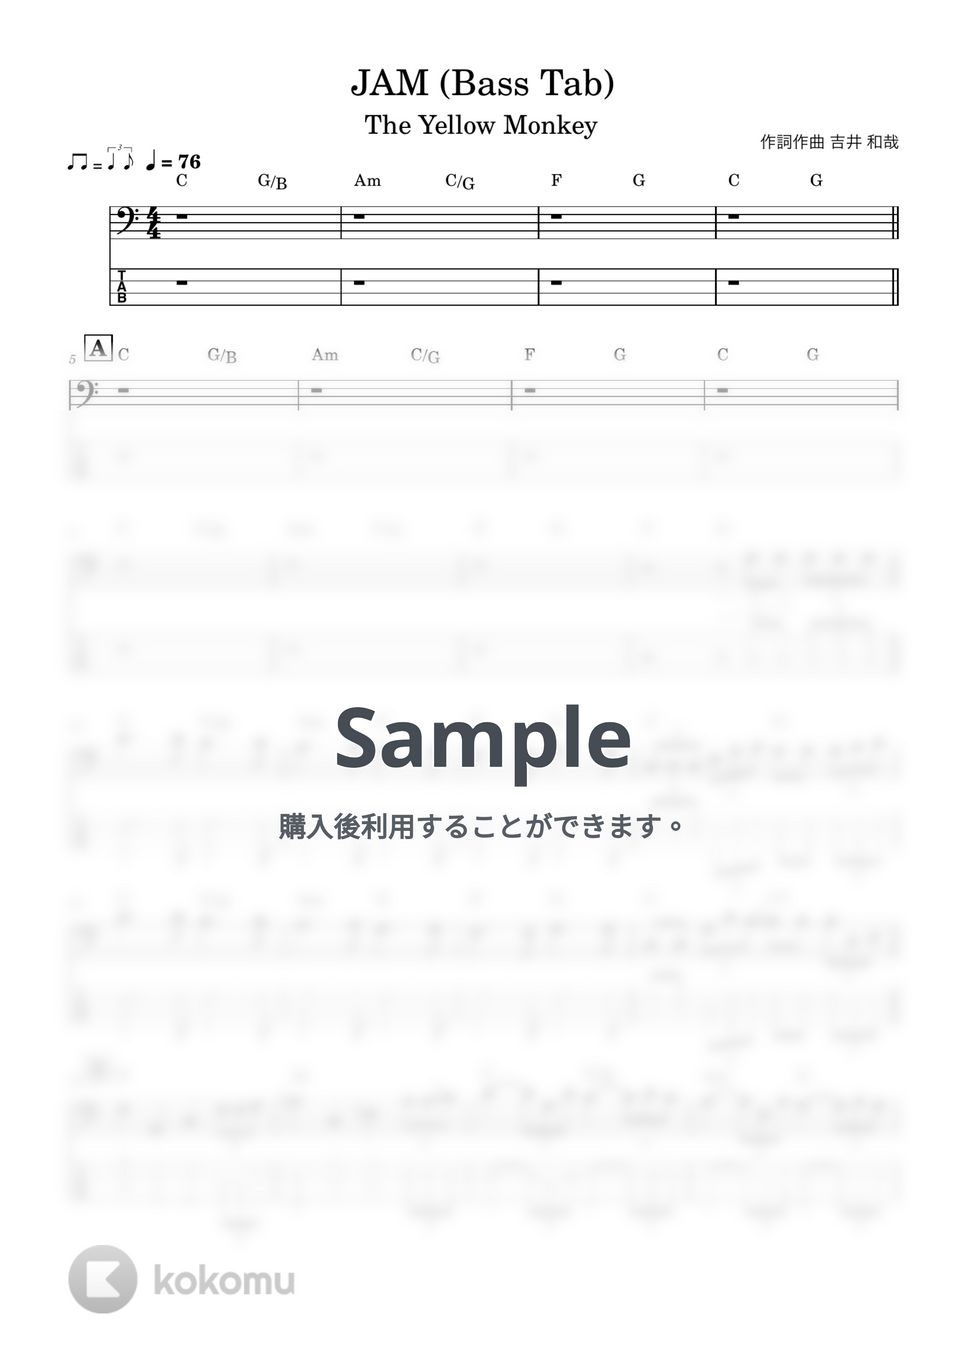 THE YELLOW MONKEY - JAM (『ポップジャム』エンディングテーマ、ベース譜) by Kodai Hojo